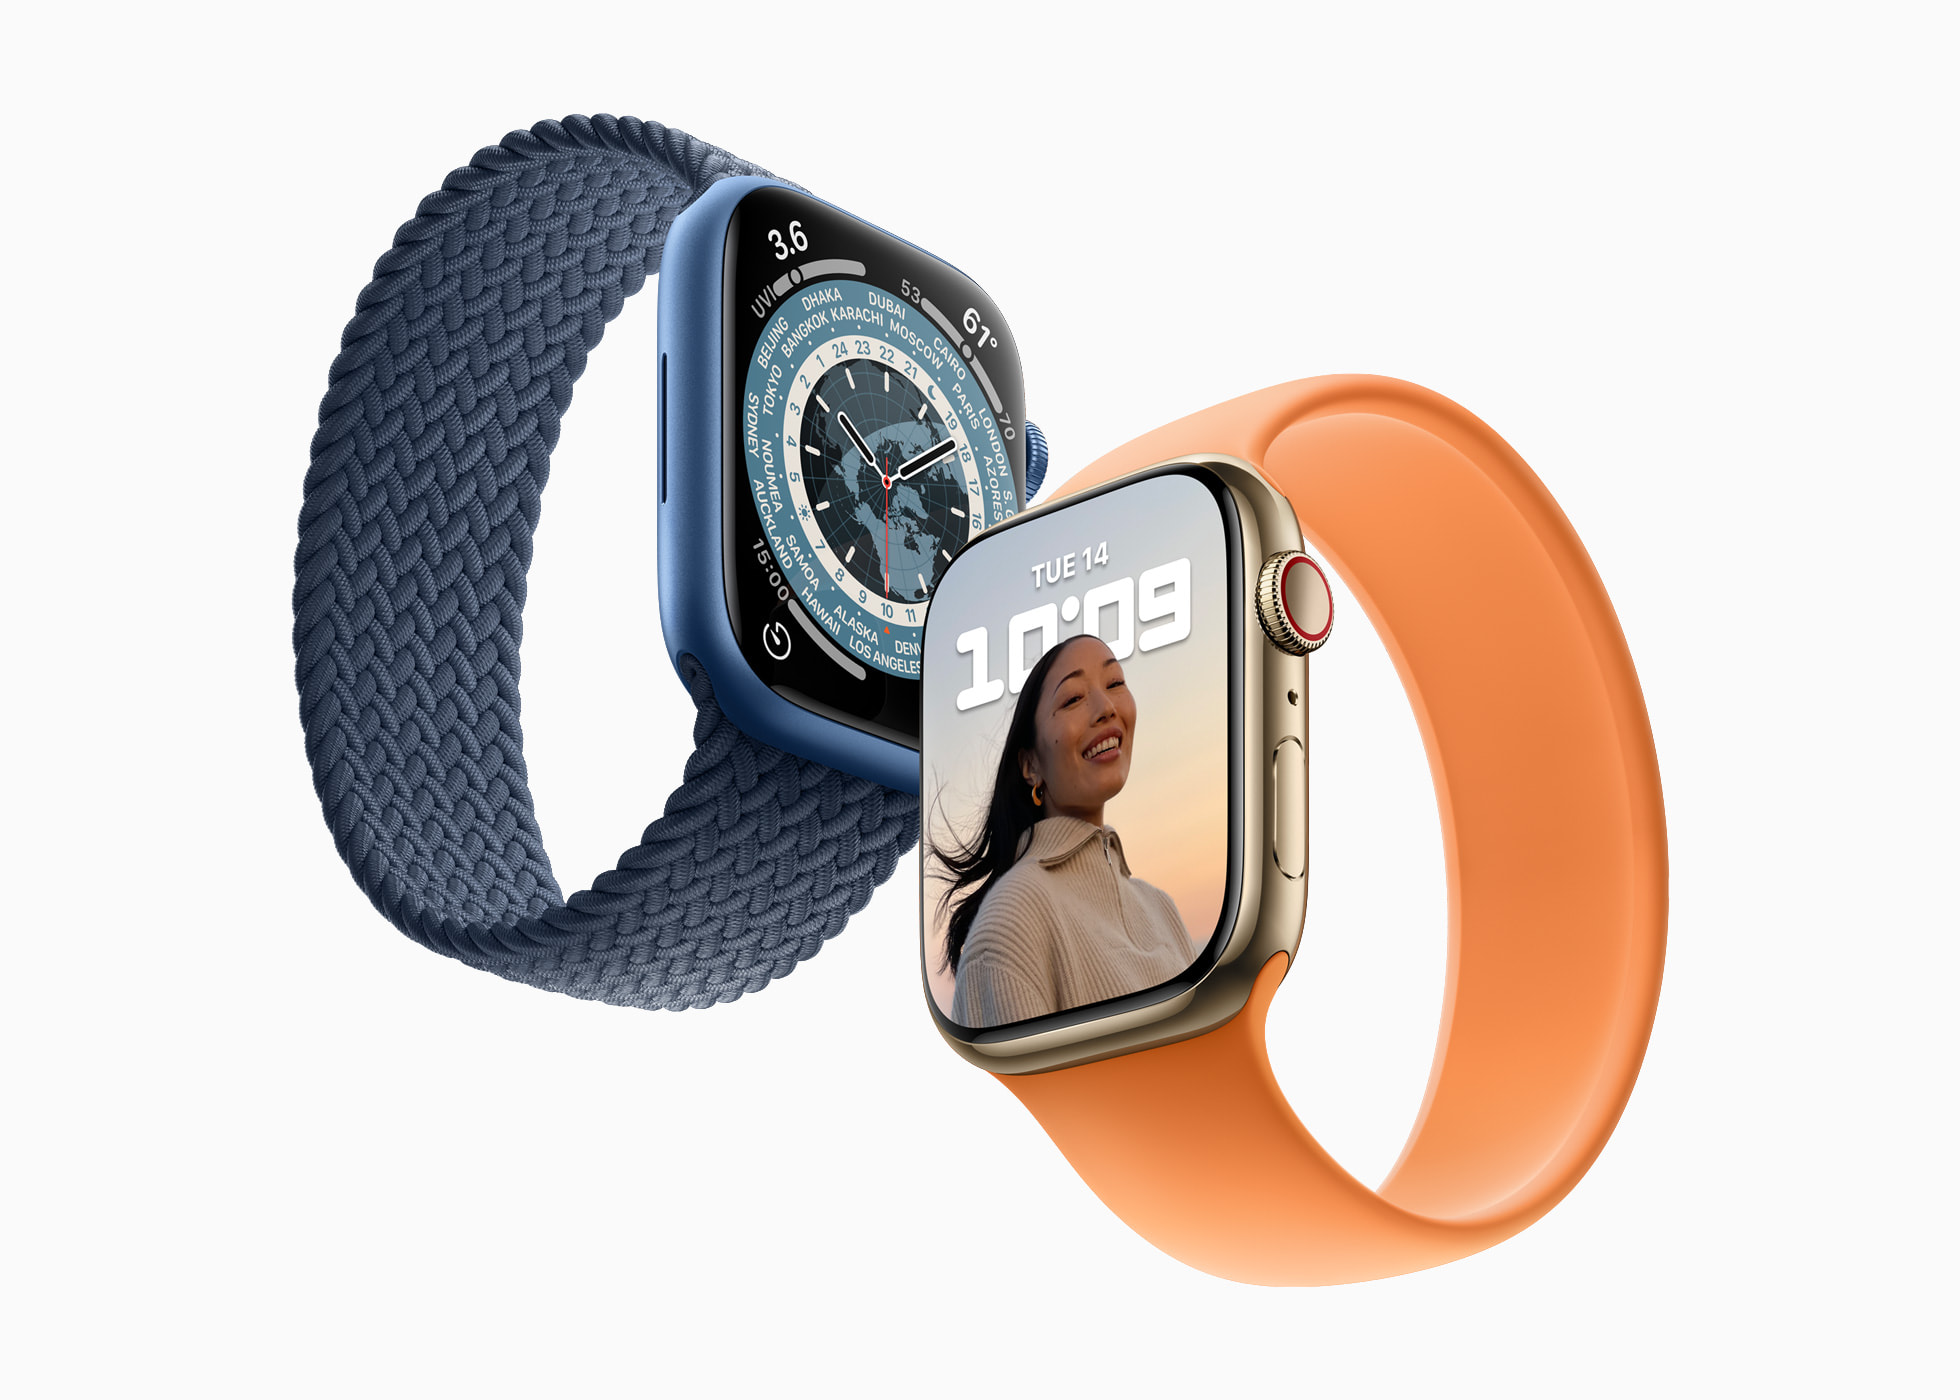 Apple Watch Series 7 orders start Friday, October 8 - Apple (CA)